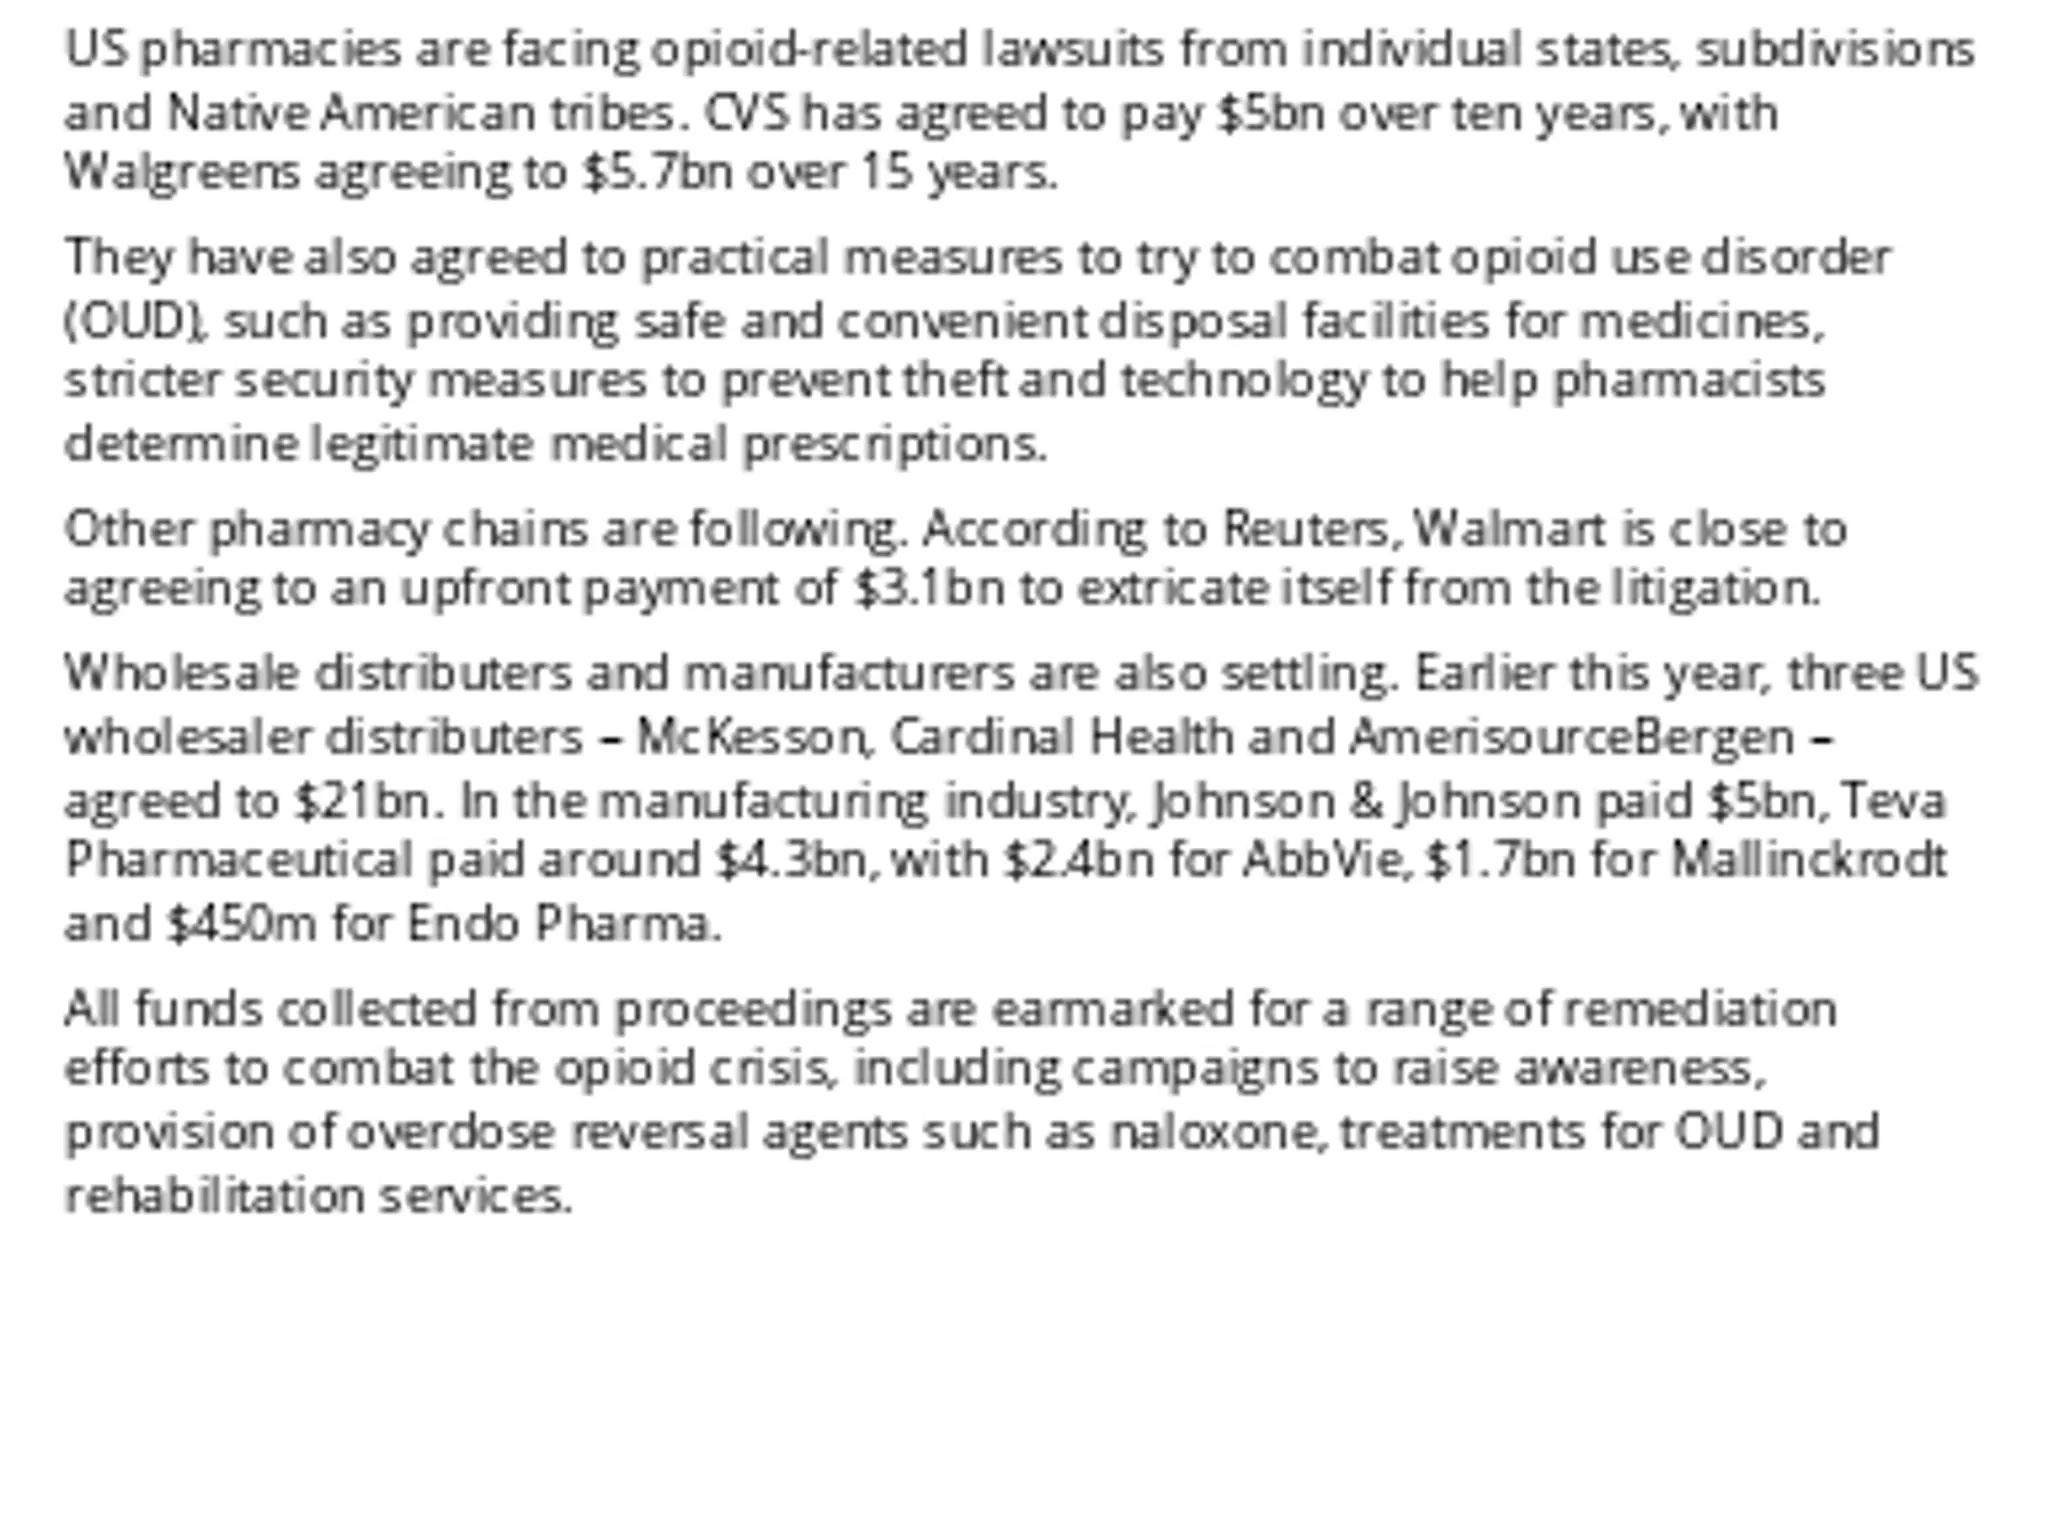 US pharmacies agree to $10bn opioid litigation settlement